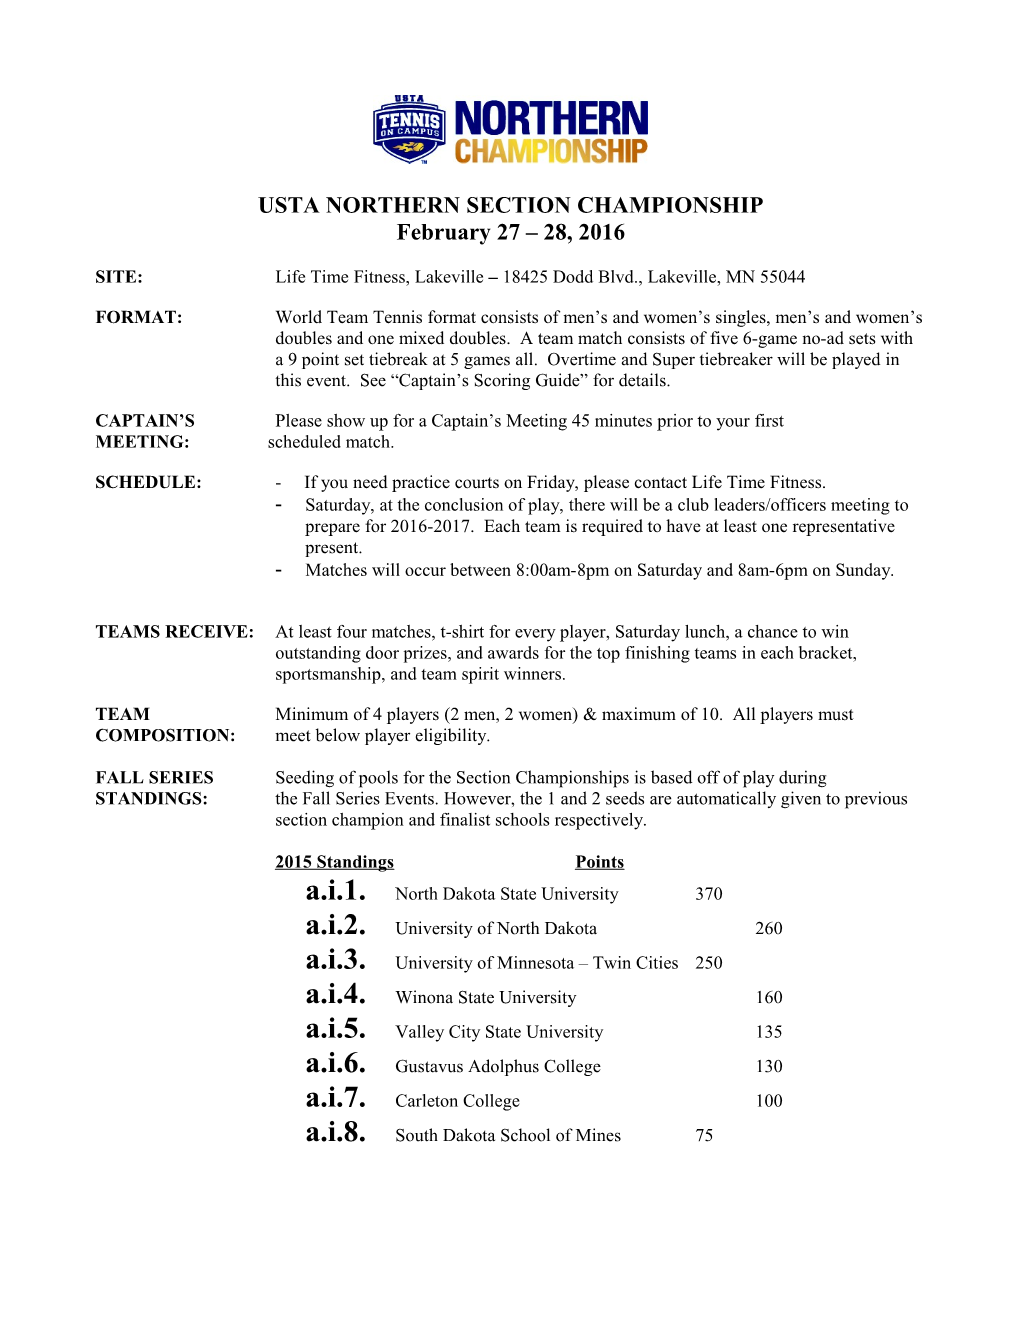 Northern Campus Championship Information 2005